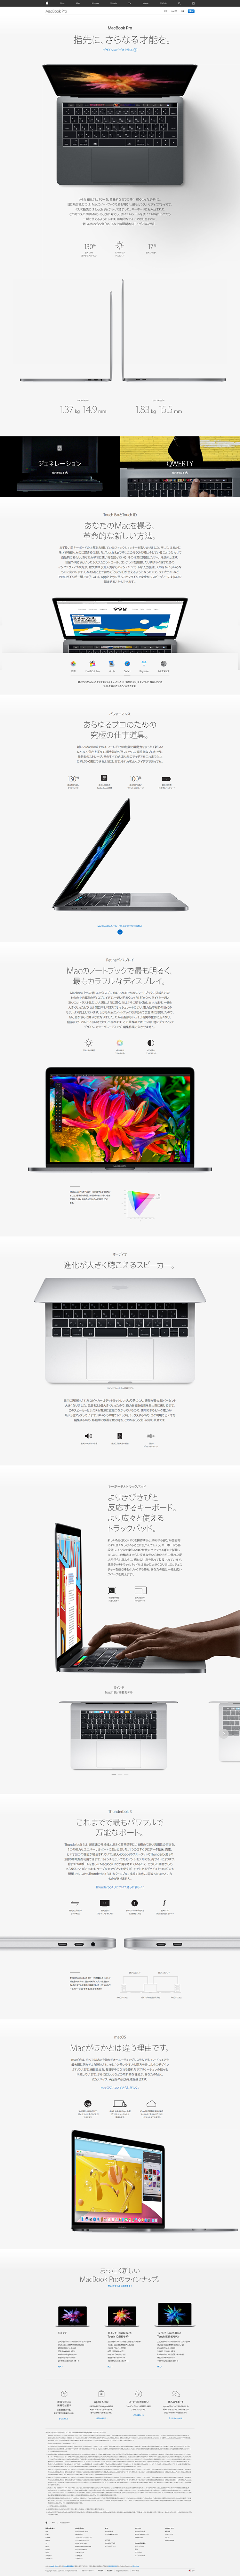 MacBook Pro_pc_1